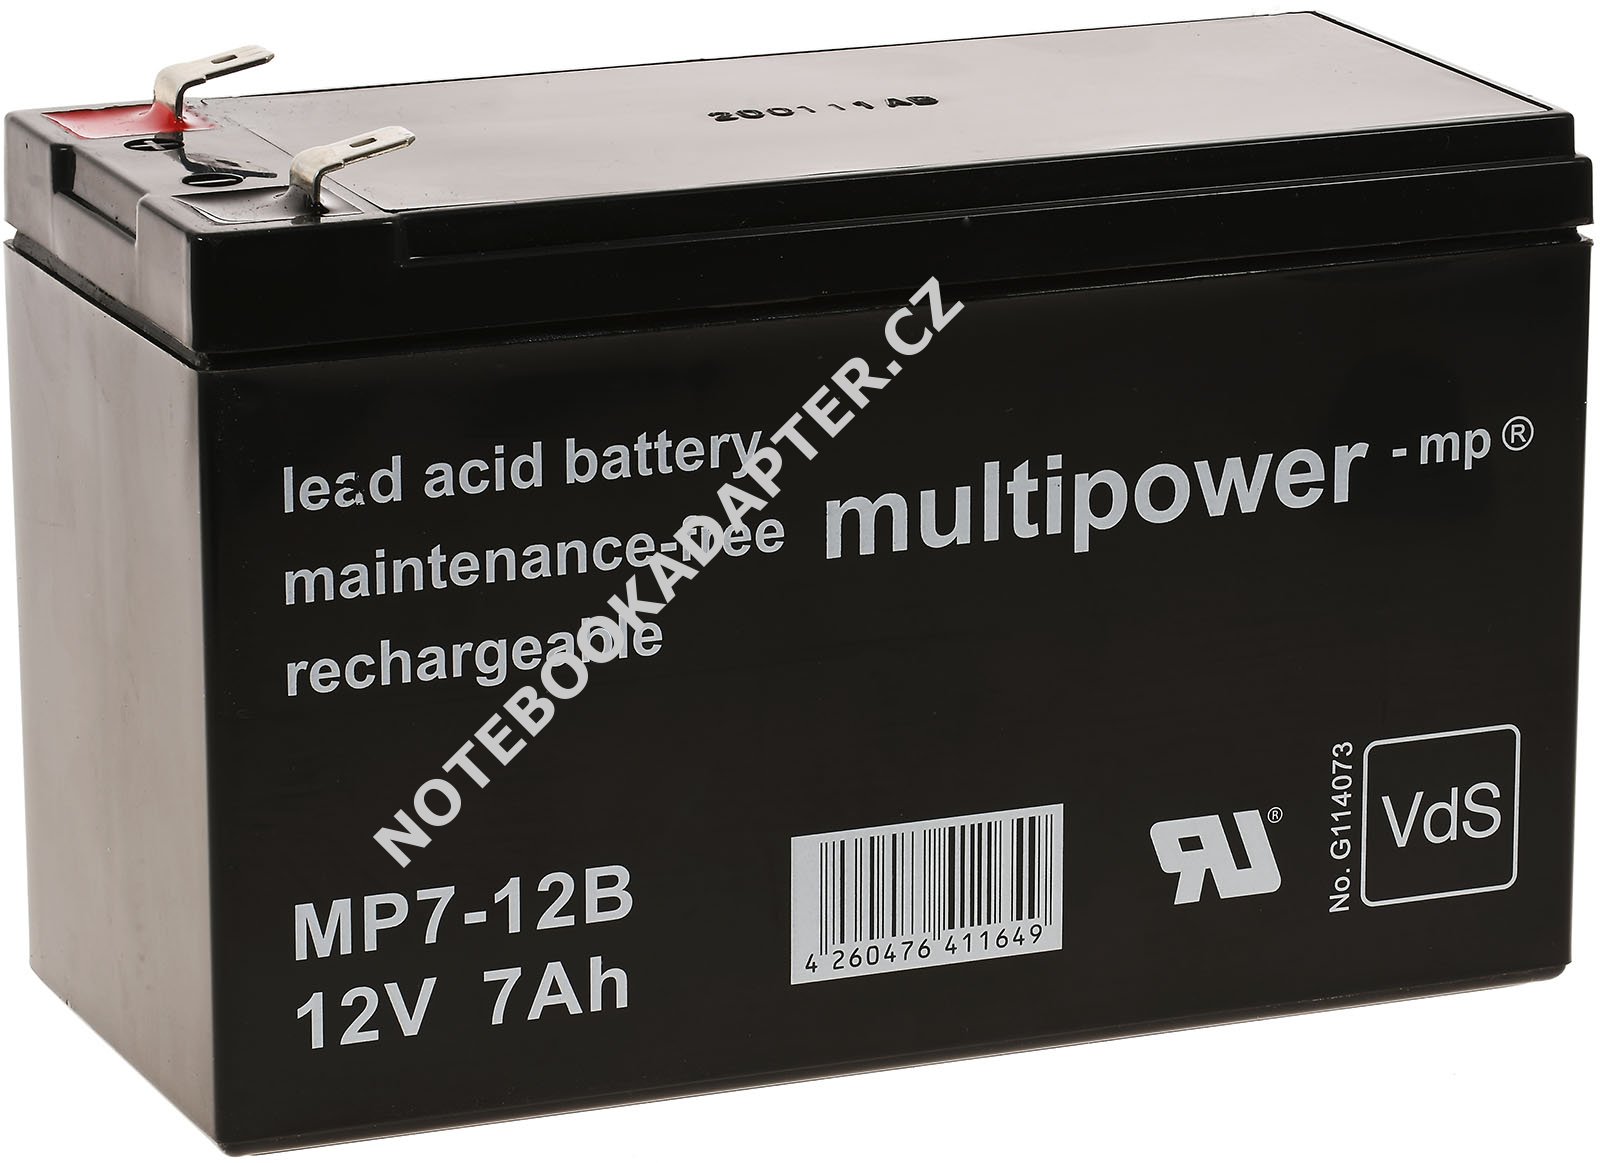 Olověná baterie UPS APC Back-UPS BH500INET - Multipower